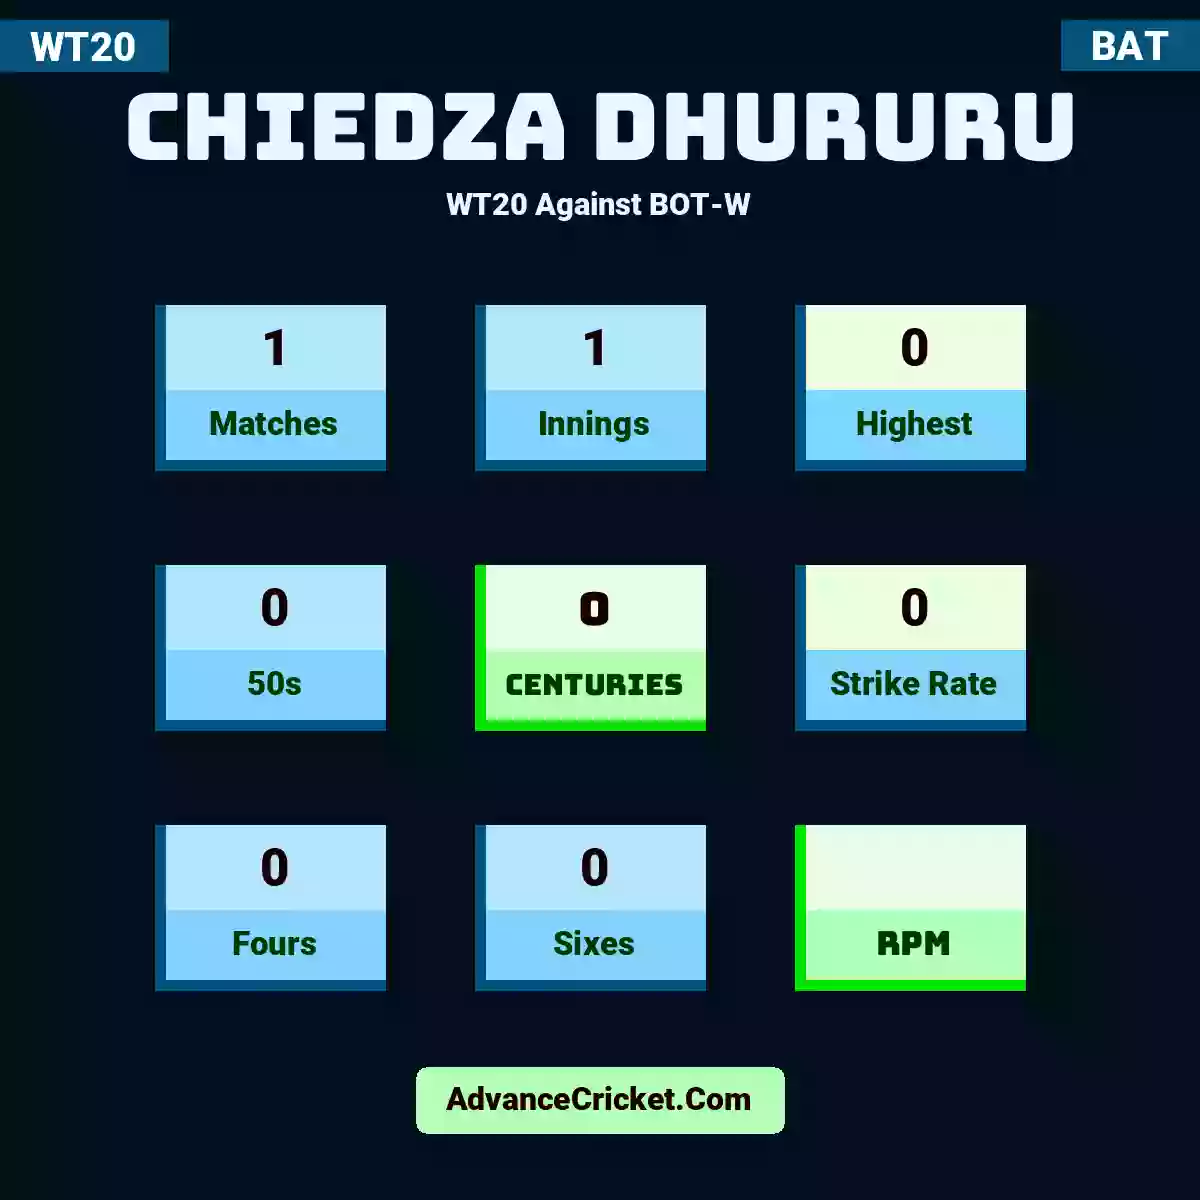 Chiedza Dhururu WT20  Against BOT-W, Chiedza Dhururu played 1 matches, scored 0 runs as highest, 0 half-centuries, and 0 centuries, with a strike rate of 0. C.Dhururu hit 0 fours and 0 sixes.